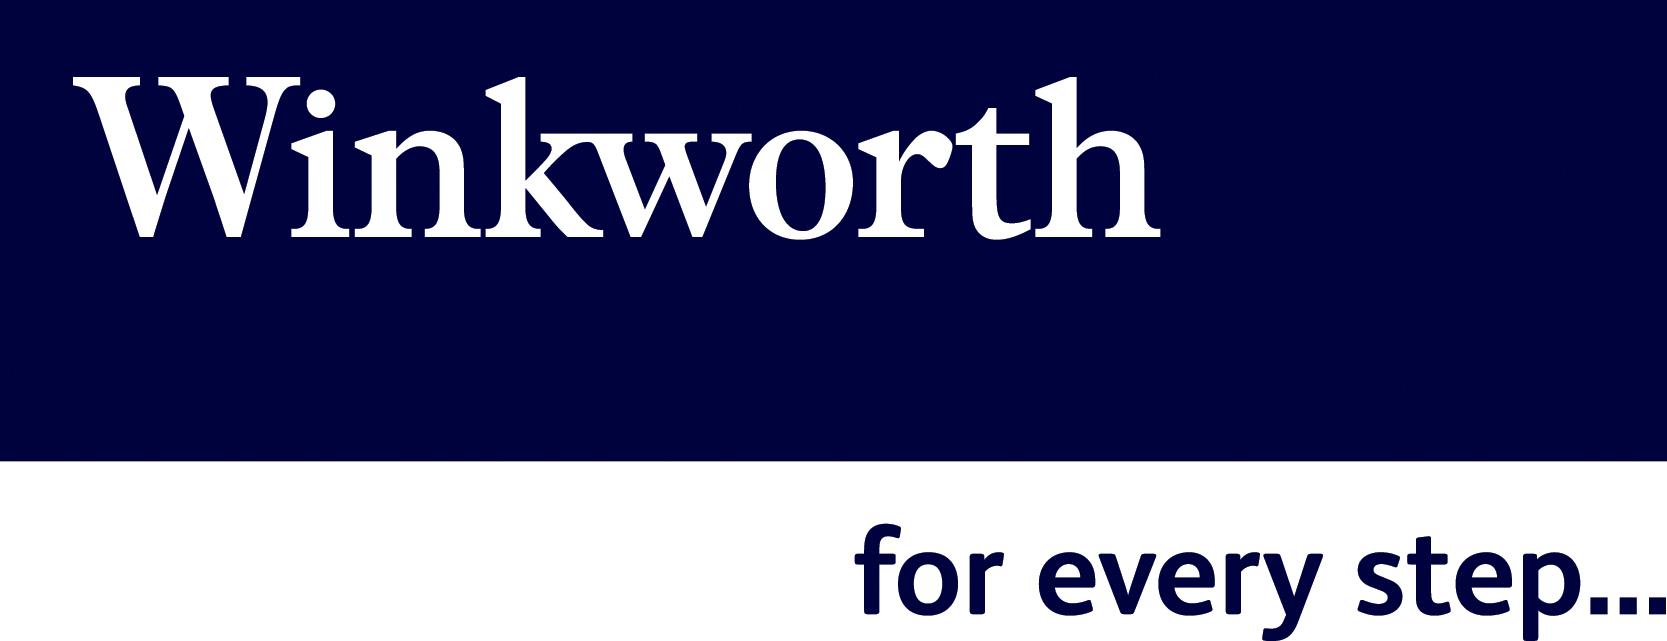 Winkworth estate agency logo